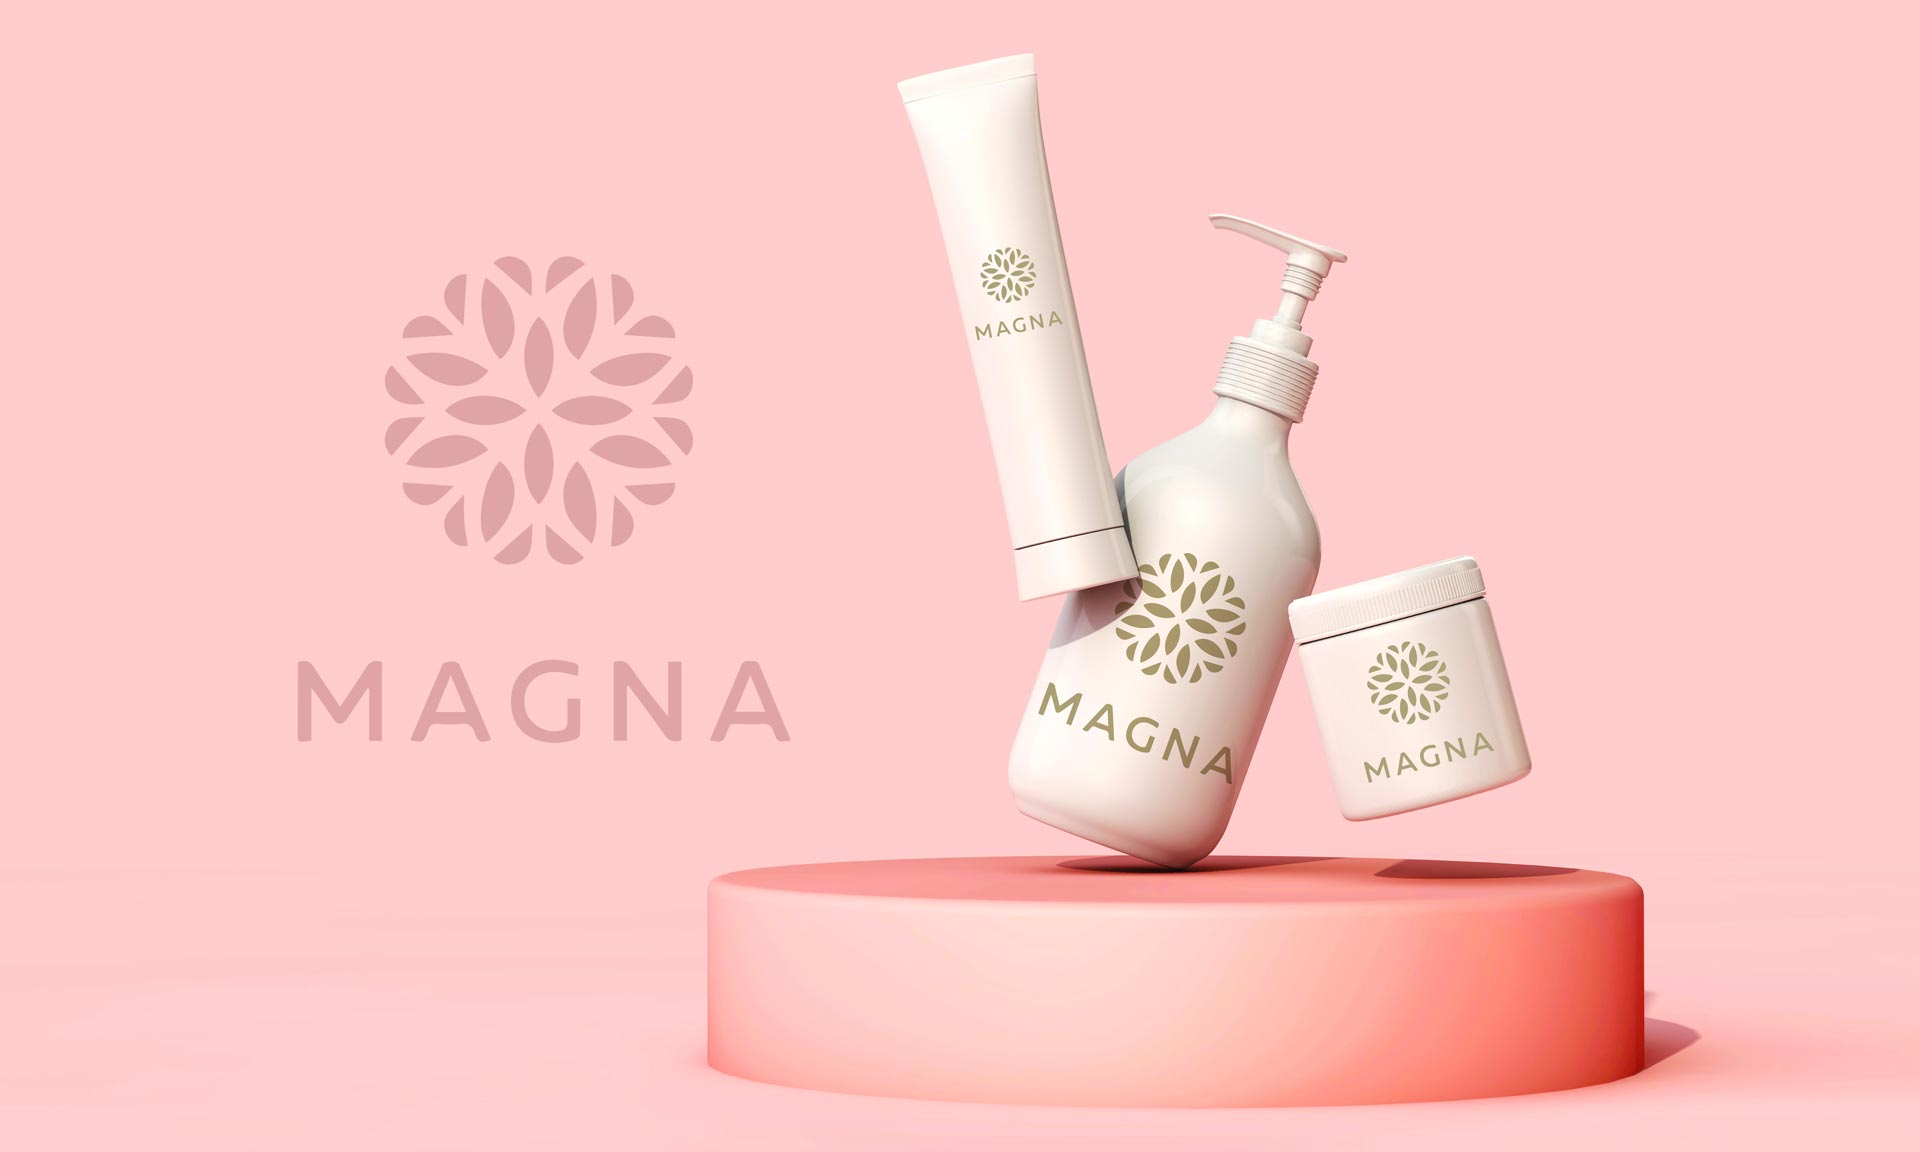 magna cosmetics line company branding - Professional Website Design Company